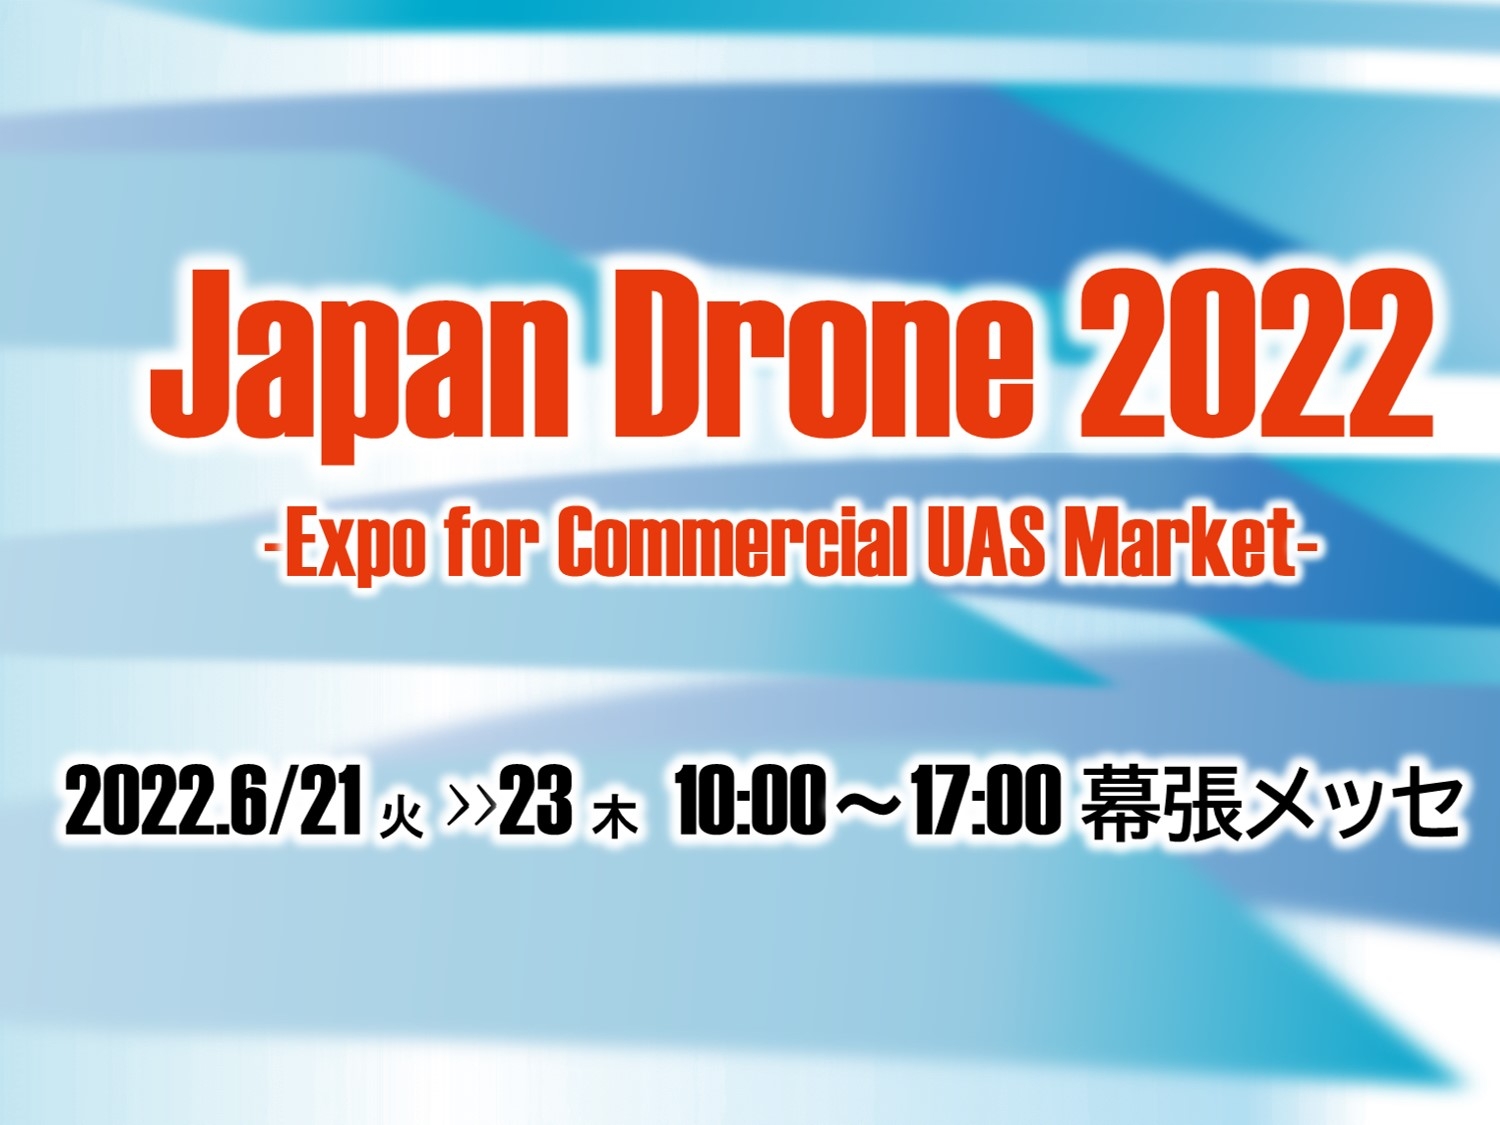 Japan Drone 2022